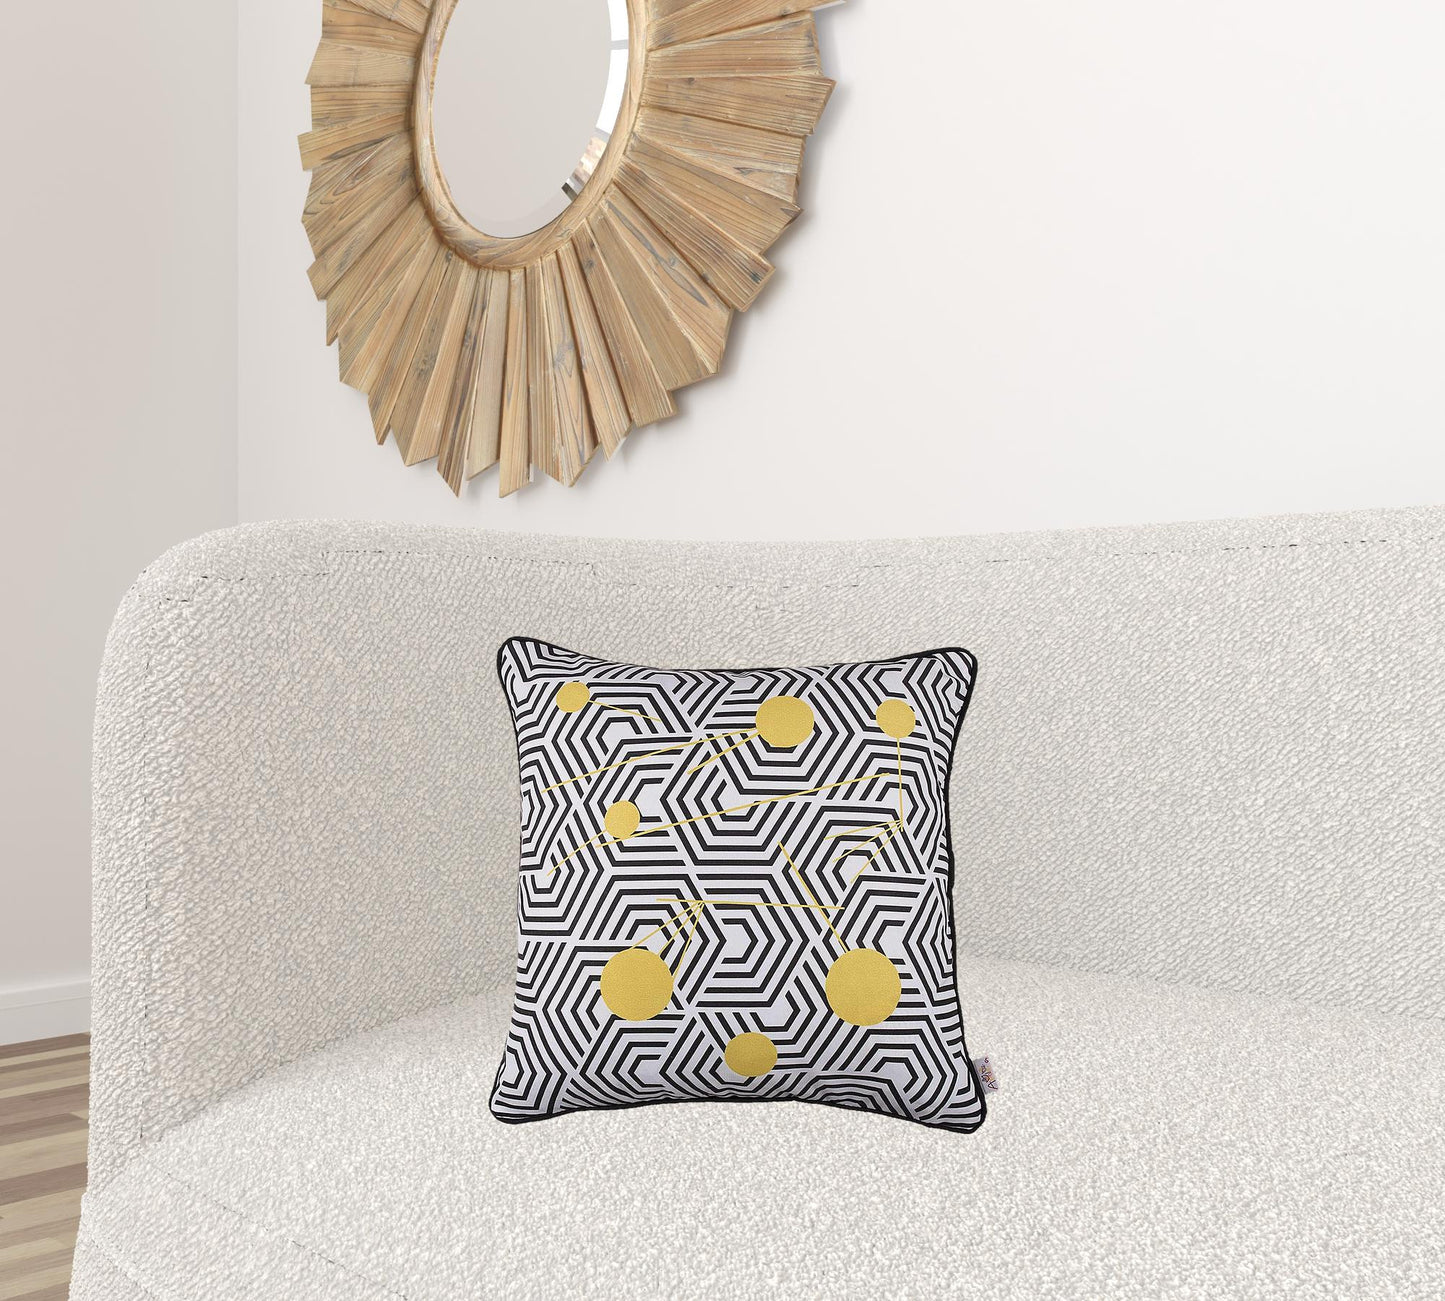 18"X18" Scandi Square Geo Printed Decorative Throw Pillow Cover